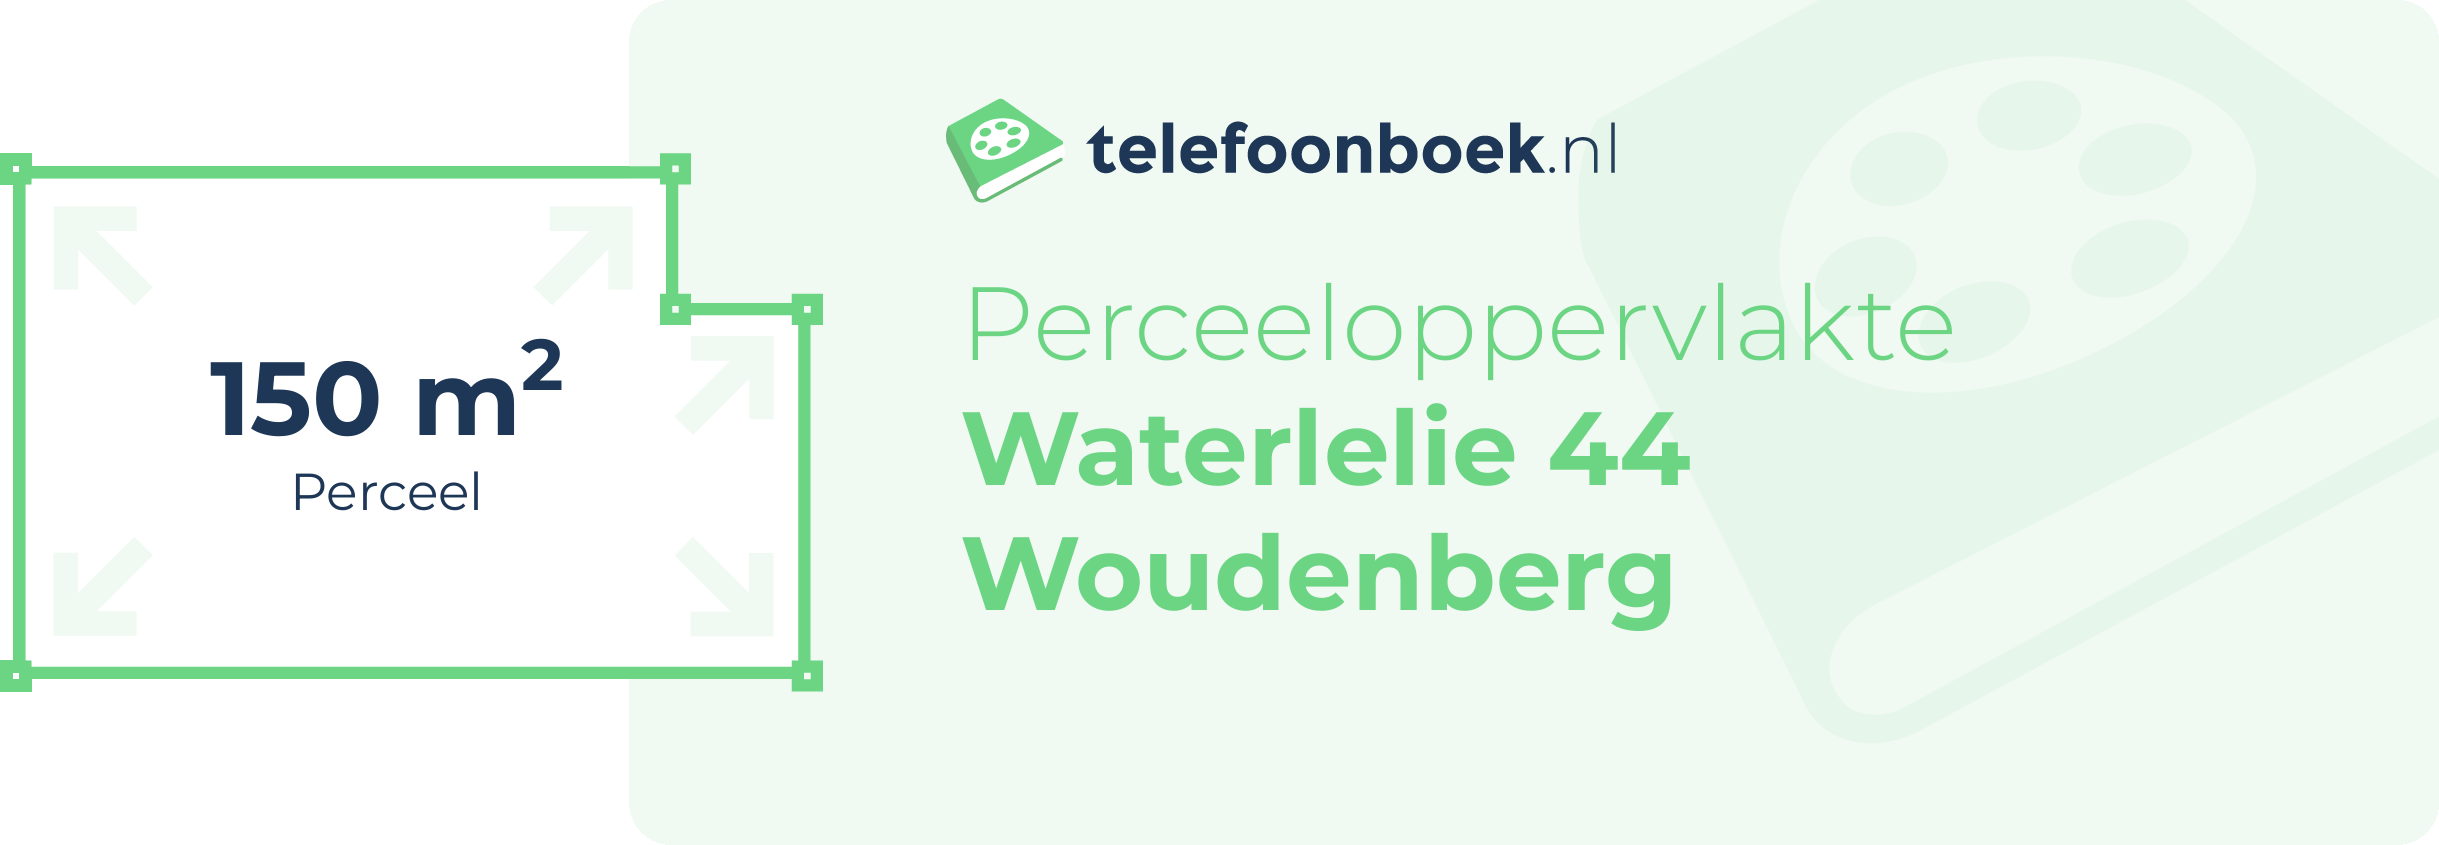 Perceeloppervlakte Waterlelie 44 Woudenberg